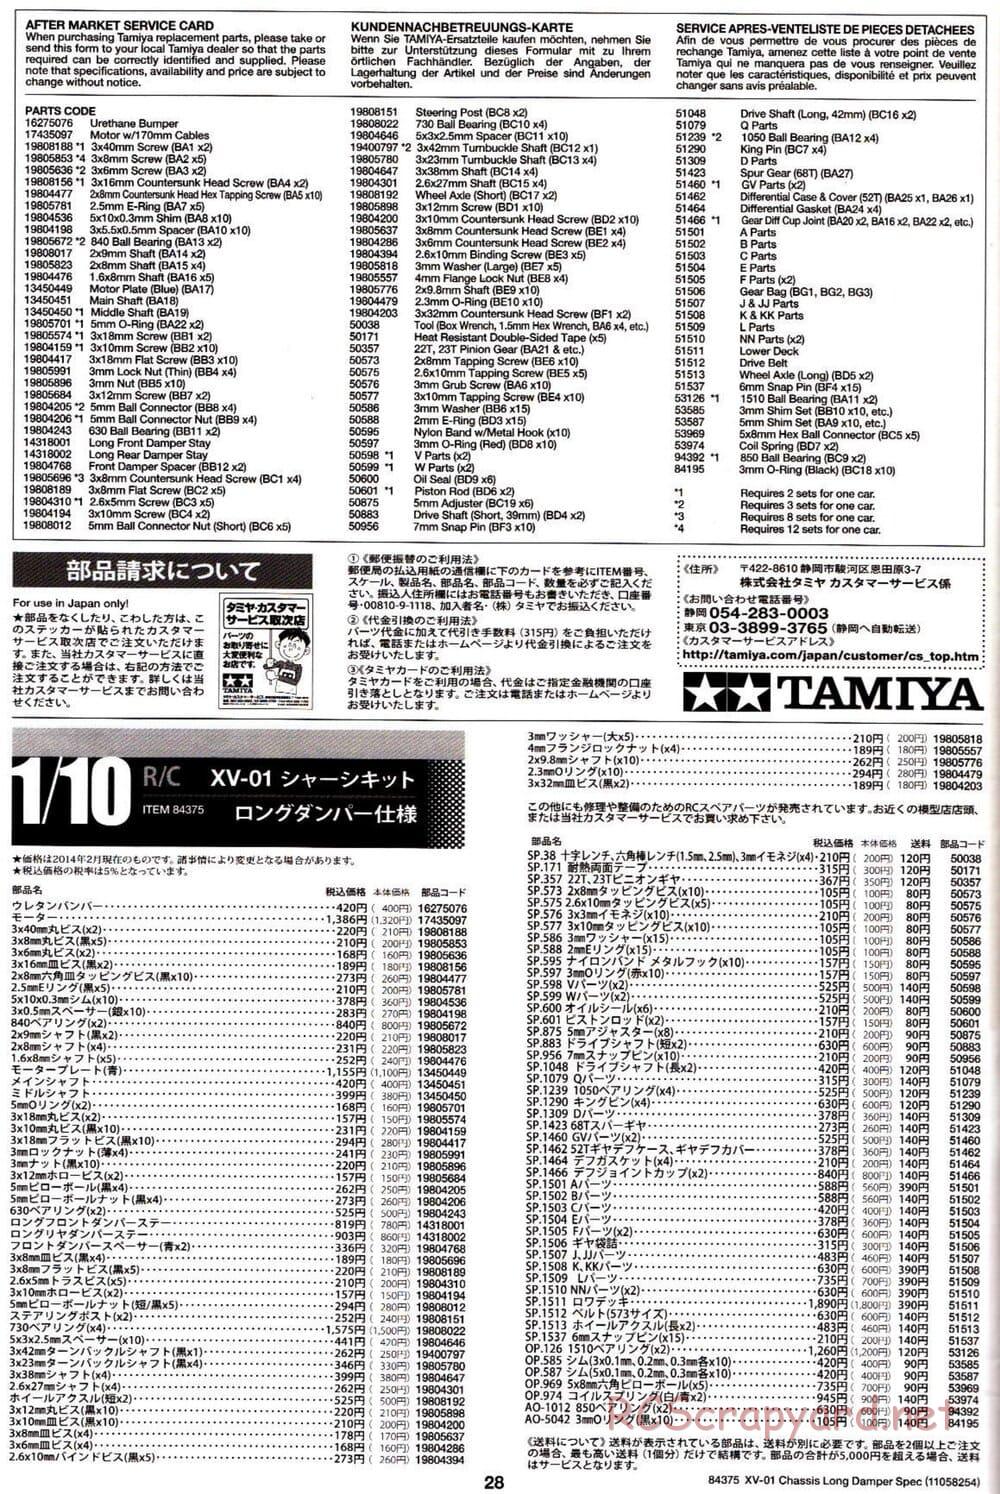 Tamiya - XV-01 Long Damper Spec Chassis - Manual - Page 28